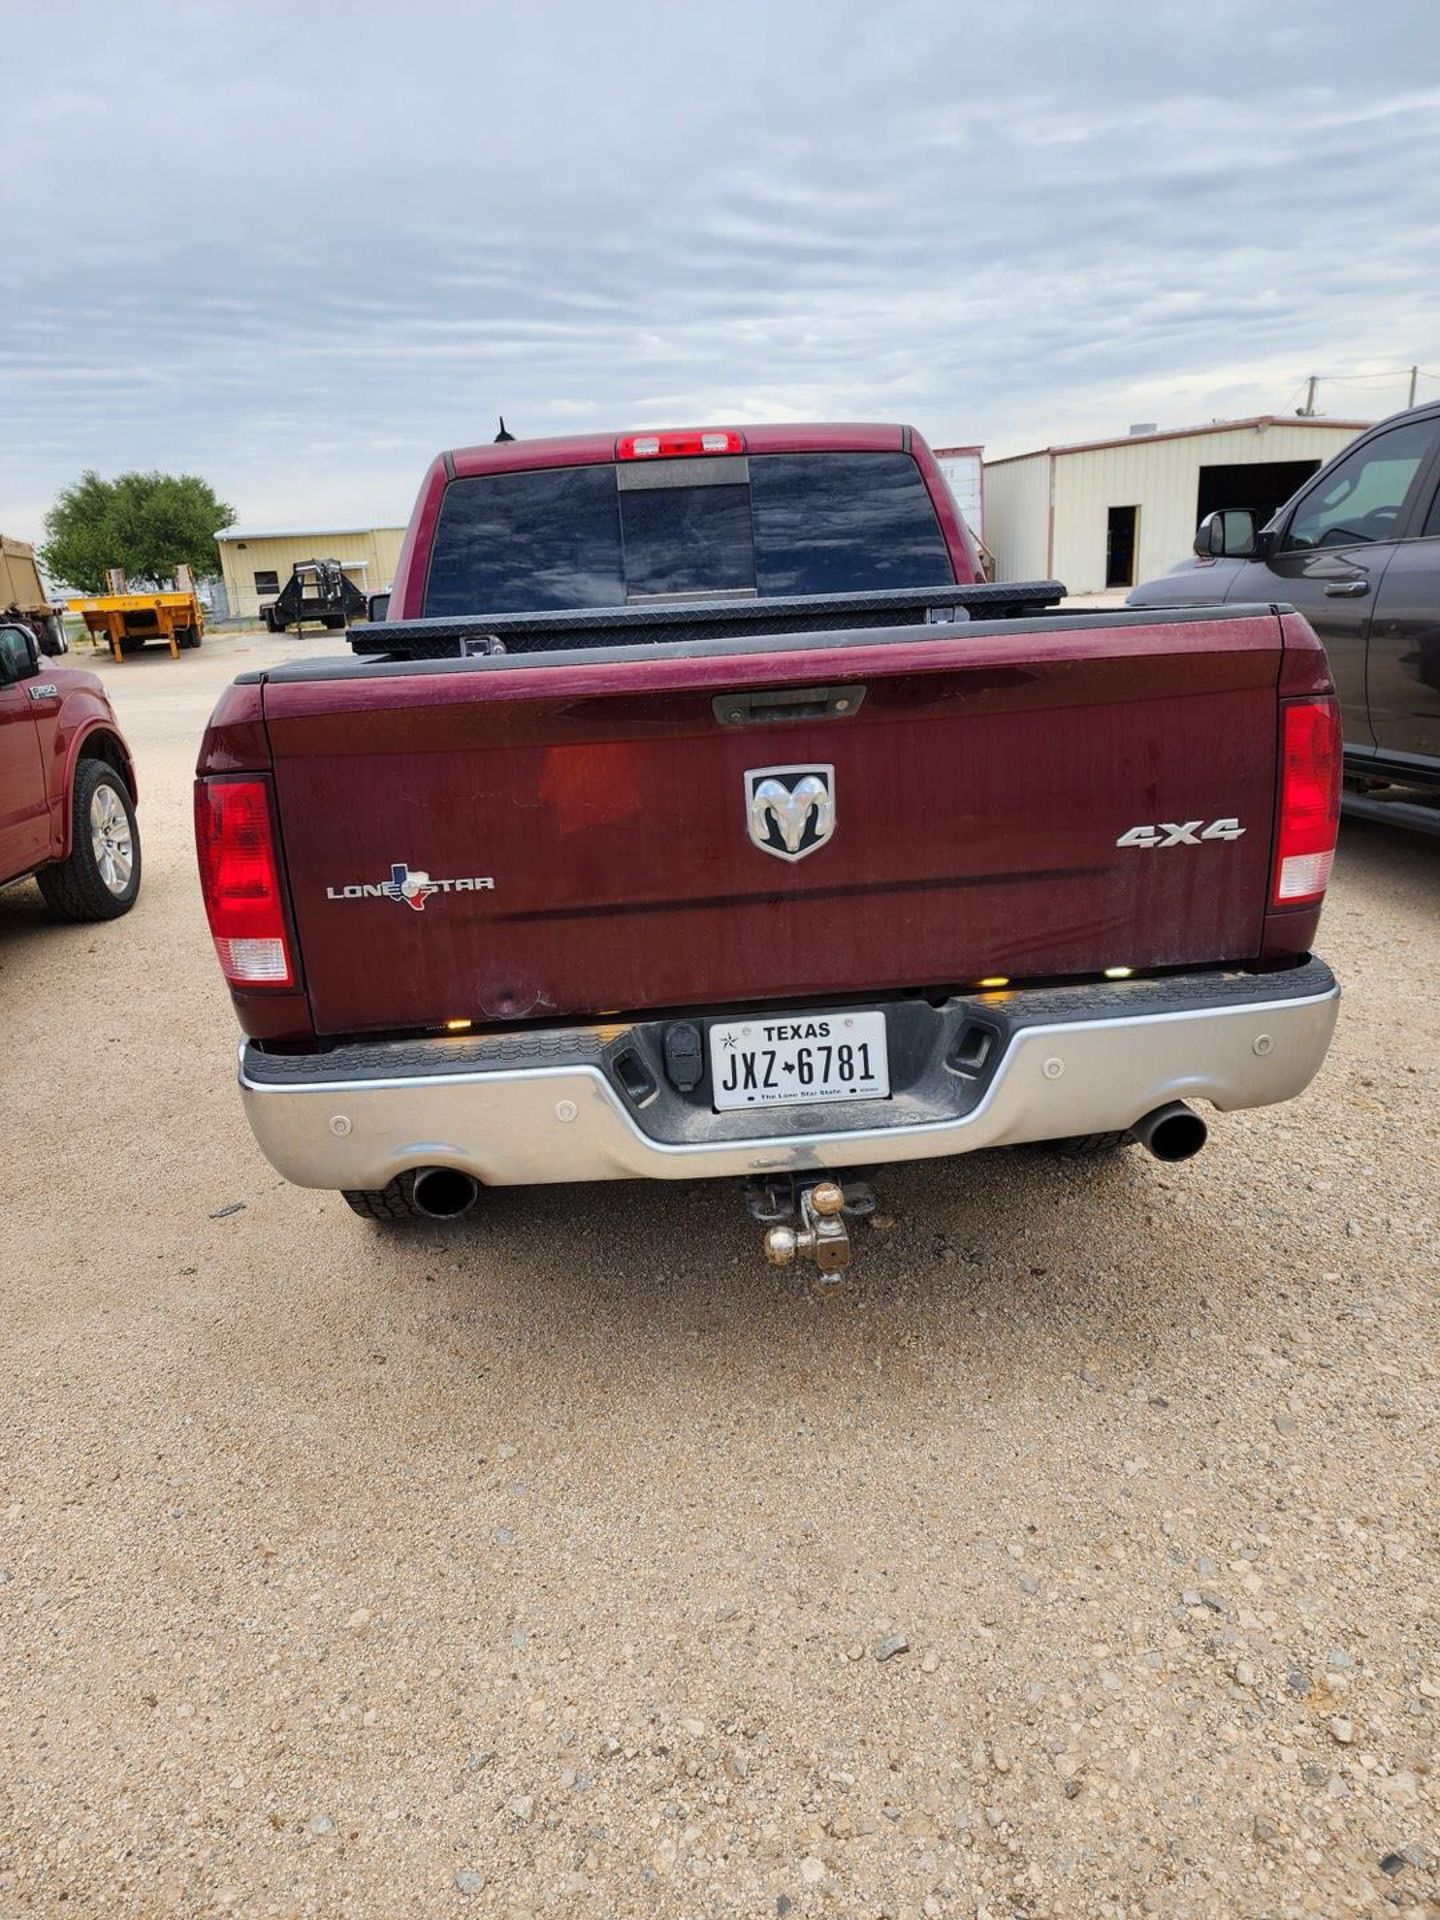 2017 Dodge Ram 1500 Hemi Truck (Gasoline) Mileage: 91,258 ; Vin: 1C6RR7LT6HS823356; TX Plate: JXZ- - Image 8 of 18